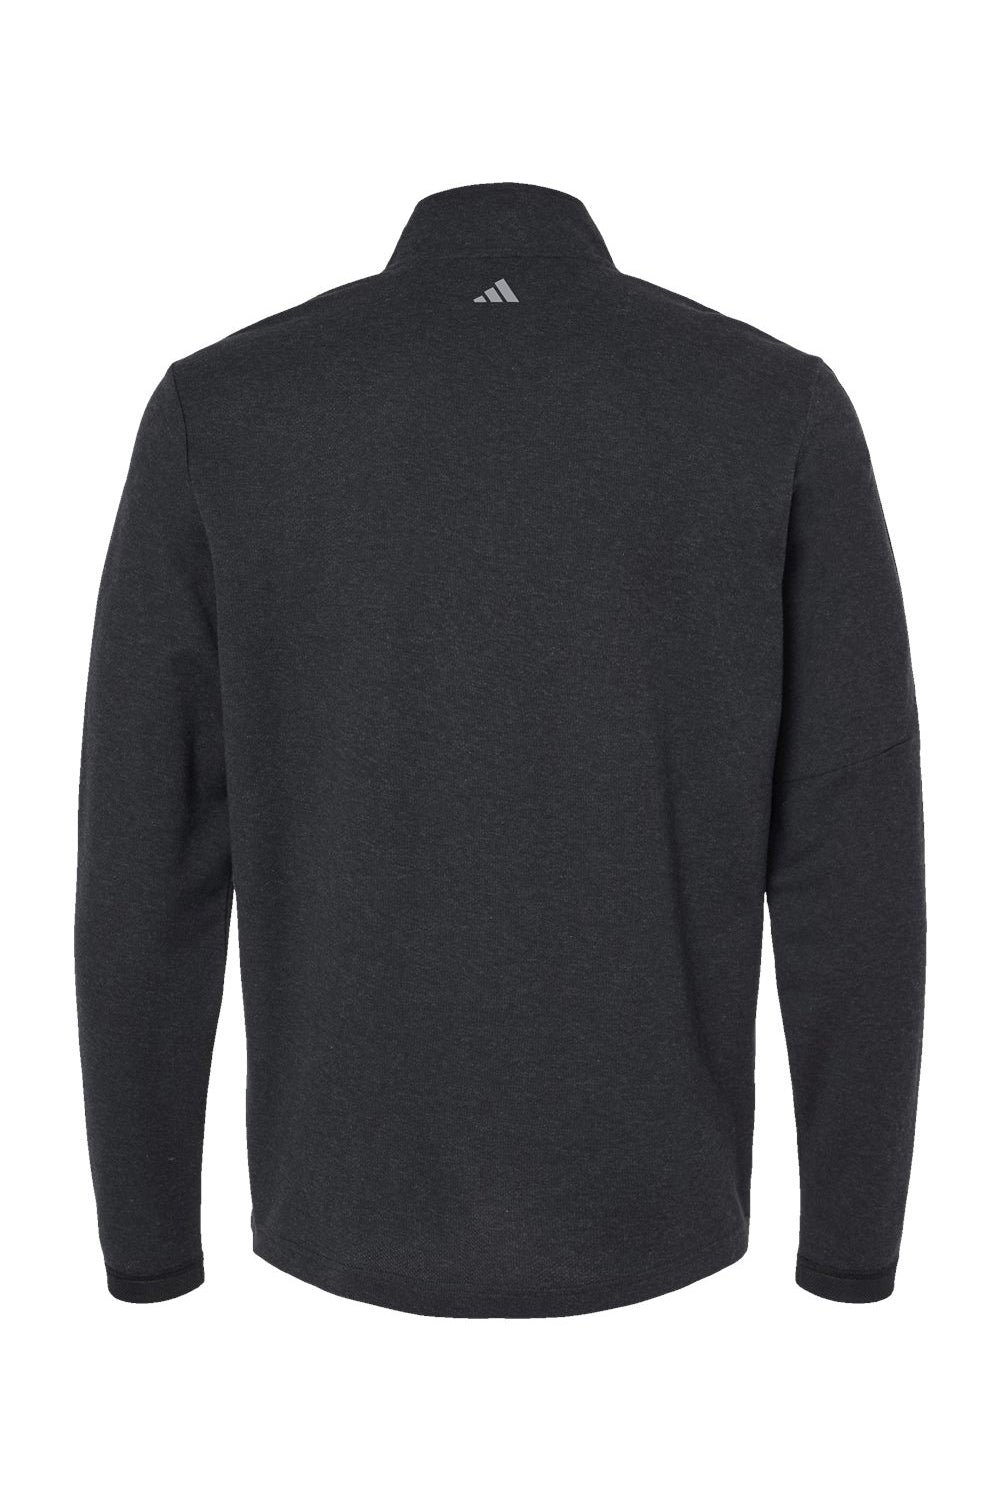 Adidas A554 Mens 3 Stripes 1/4 Zip Sweater Black Melange Flat Back